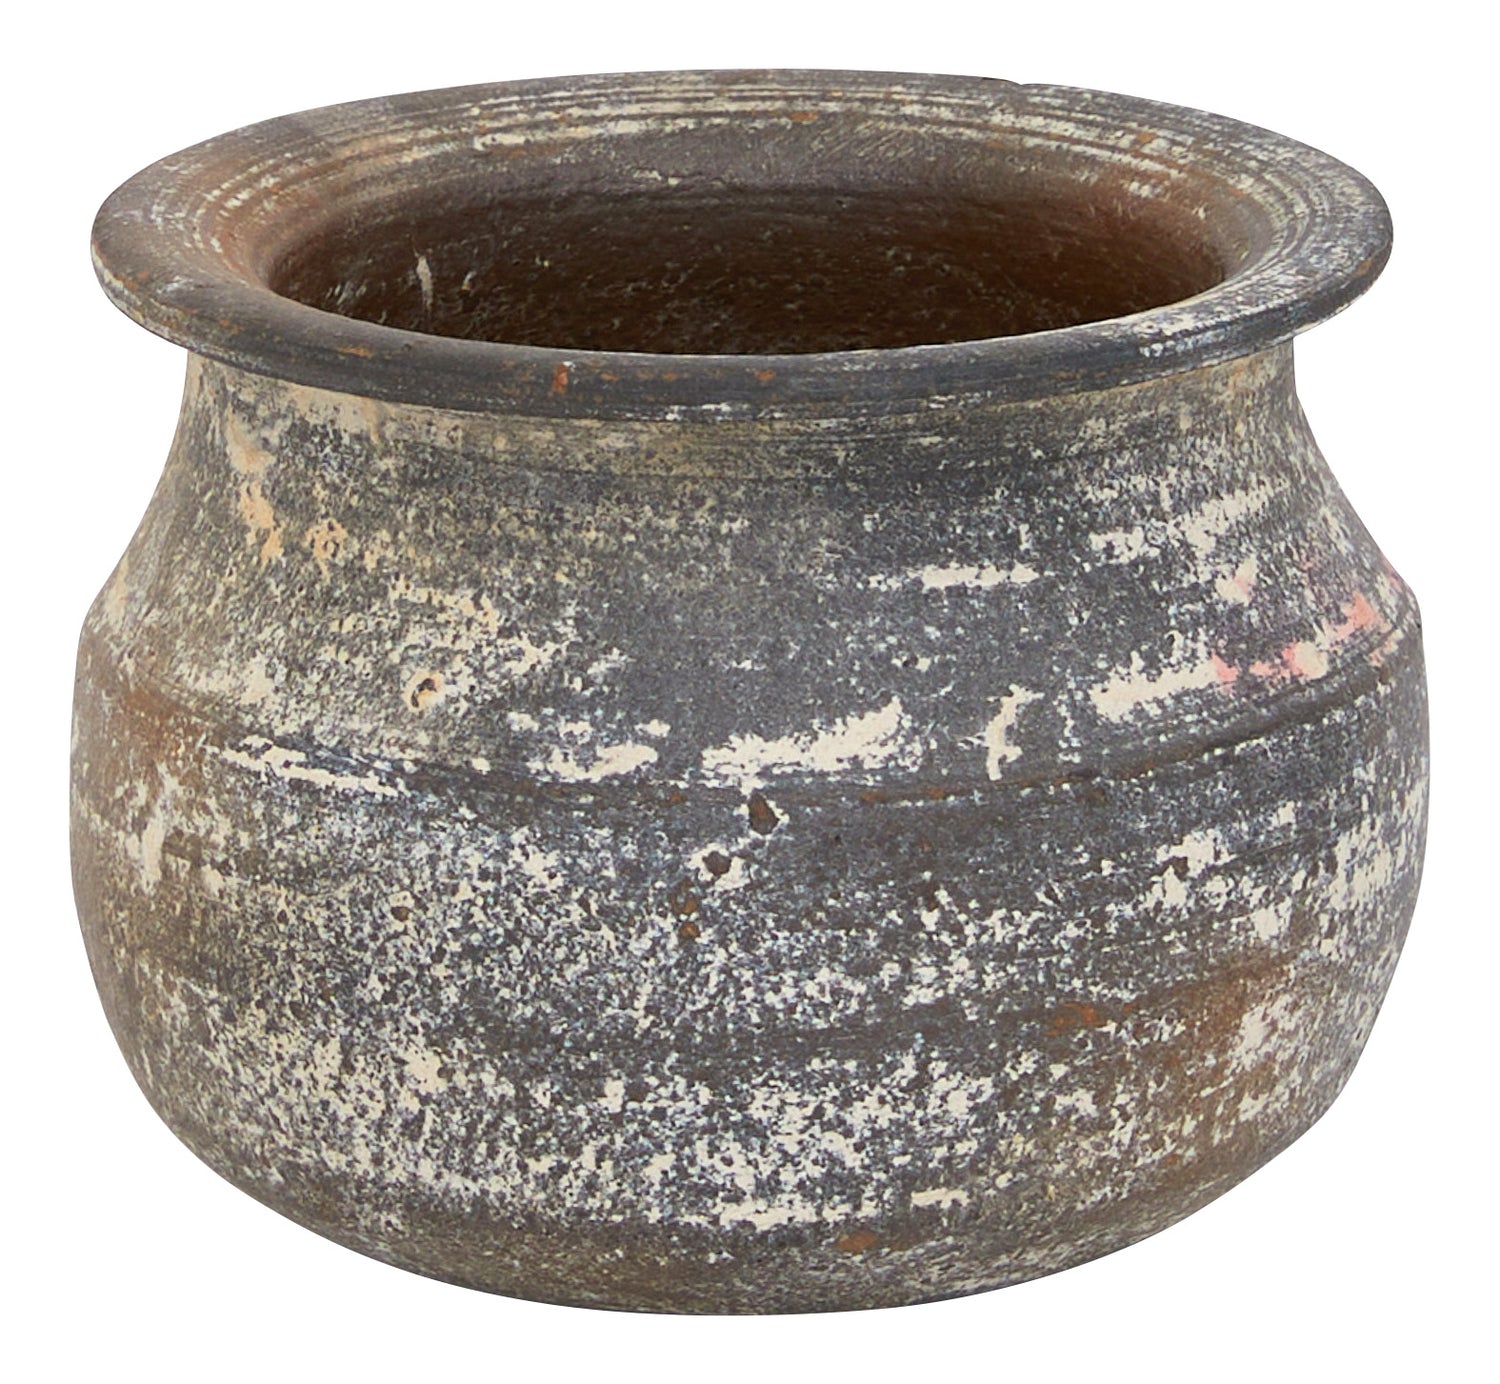 6.5 Standard Terra Cotta Clay Pot